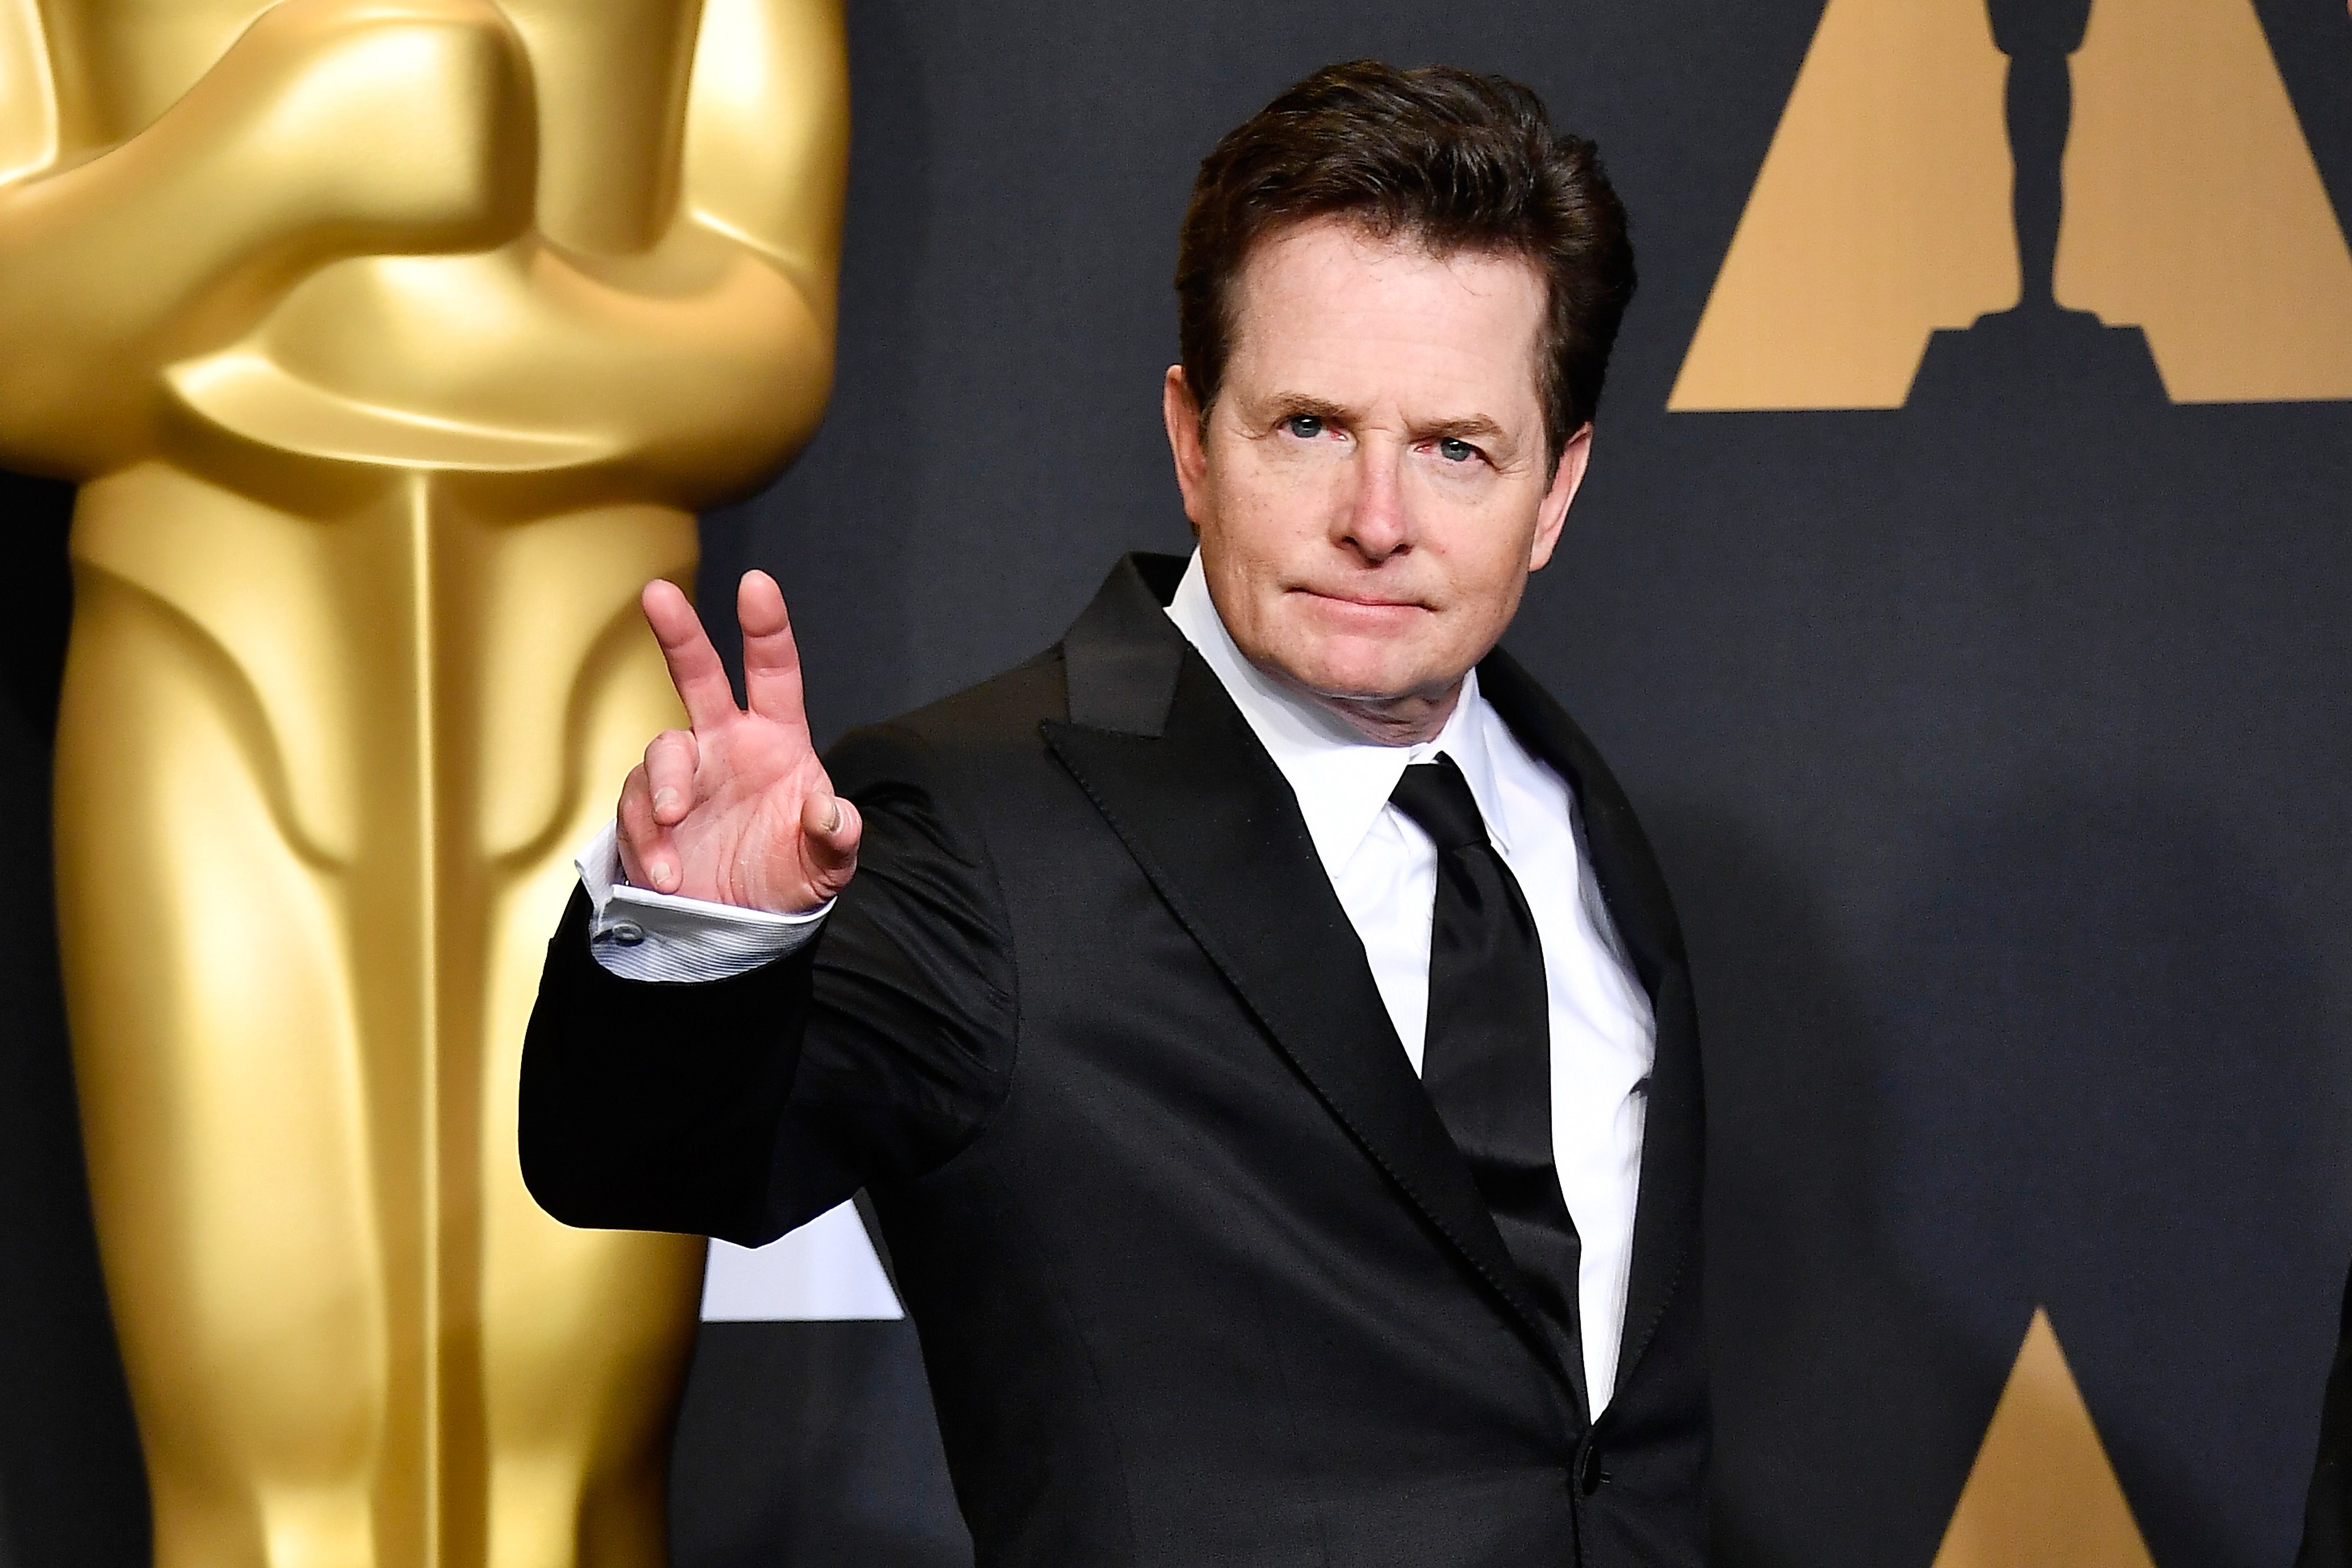 Michael J. Fox reveals he would go 